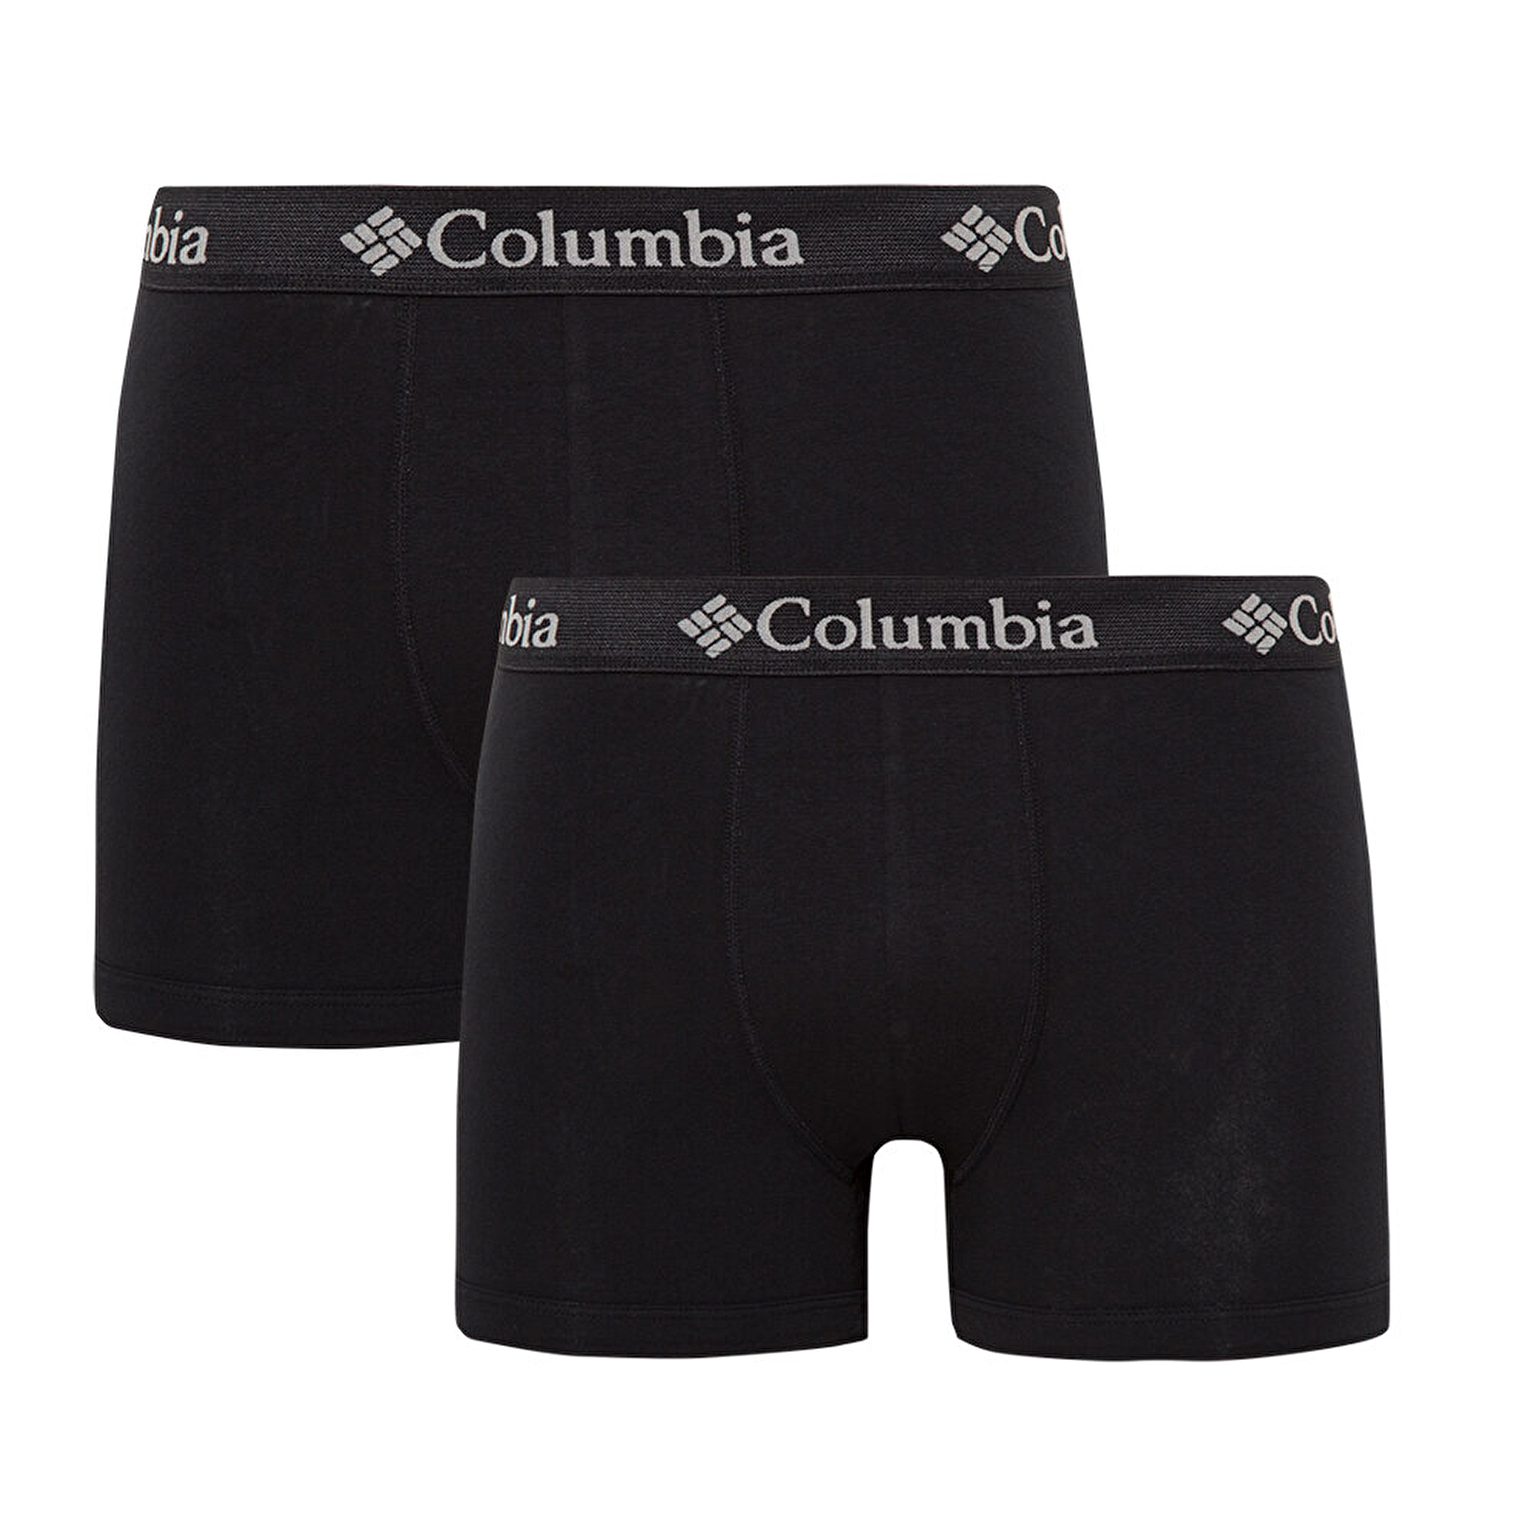 Columbia Boxer Trunk